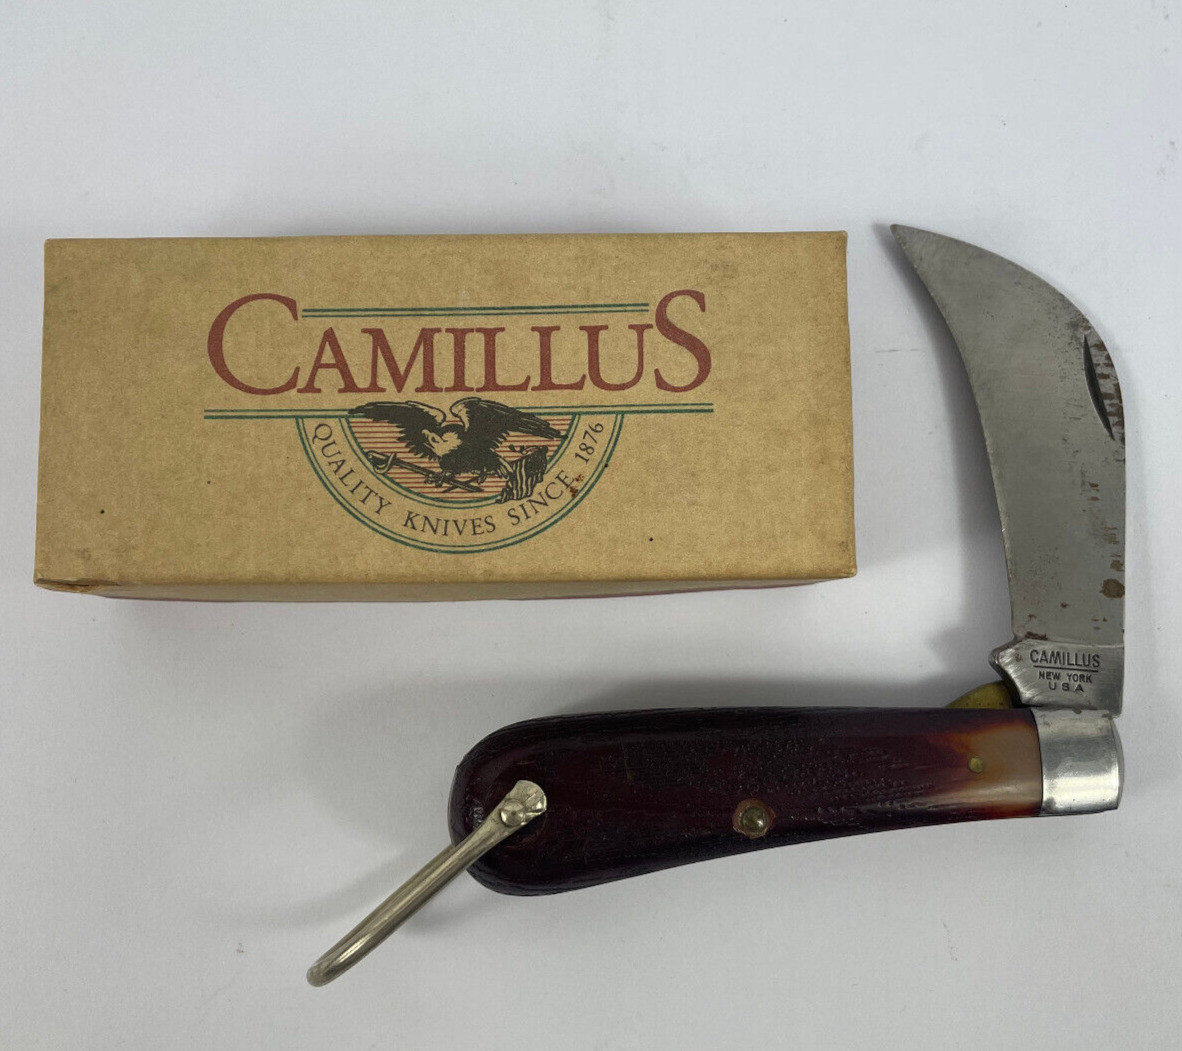 CHANNEL LOCK #10 CAMILLUS USA HAWK FOLDING POCKET SKINNING KNIFE